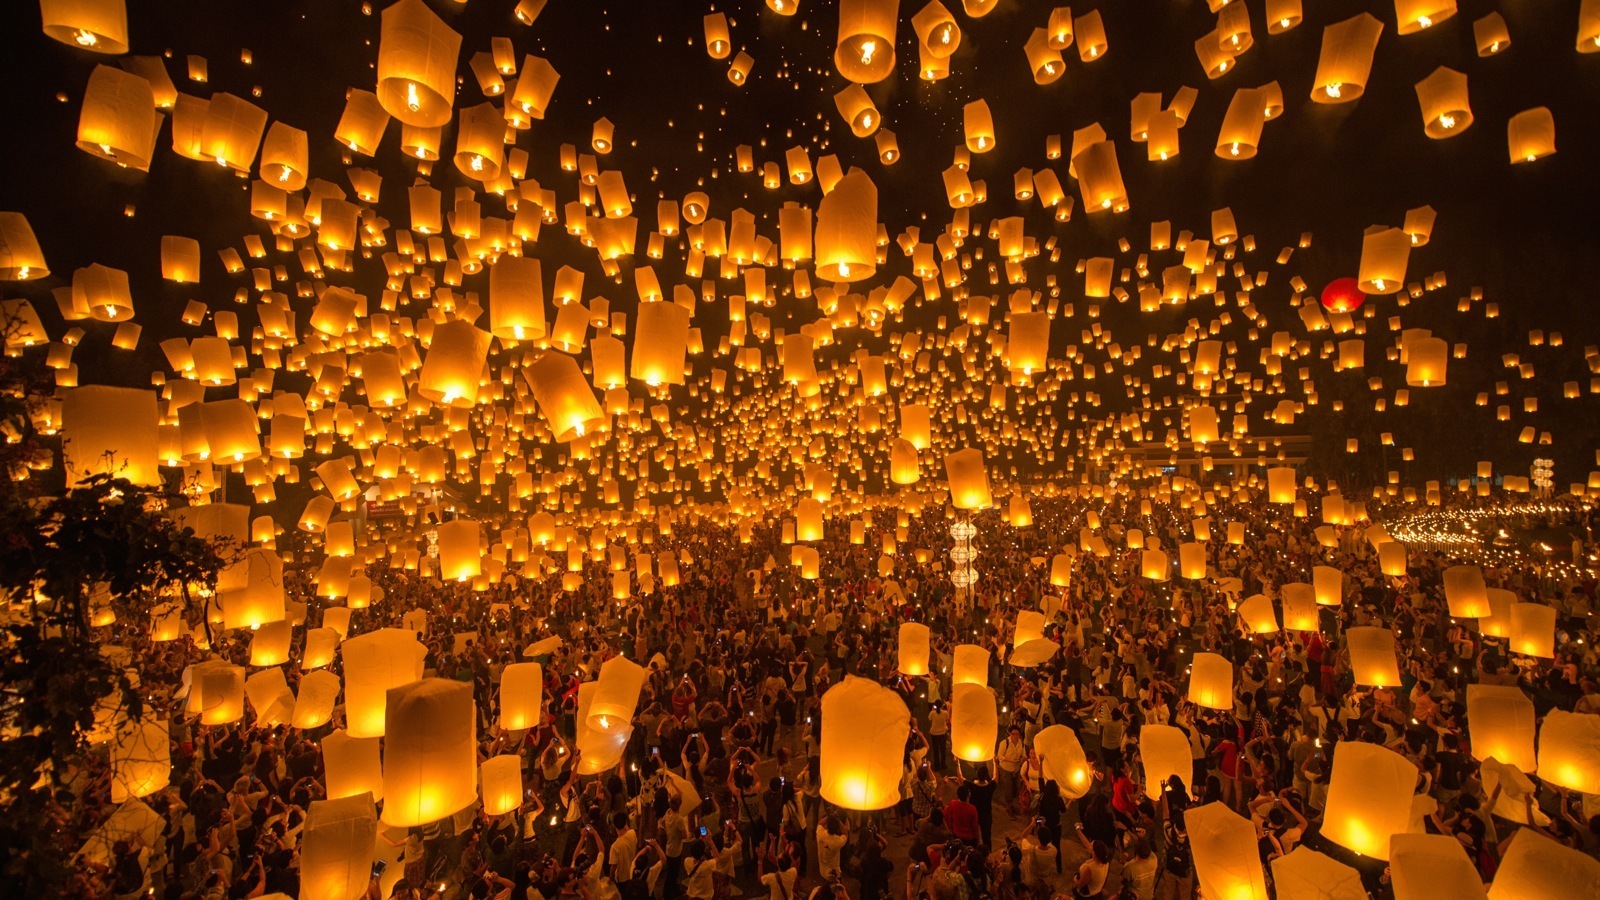 Floating Lanterns Festival Wallpapers